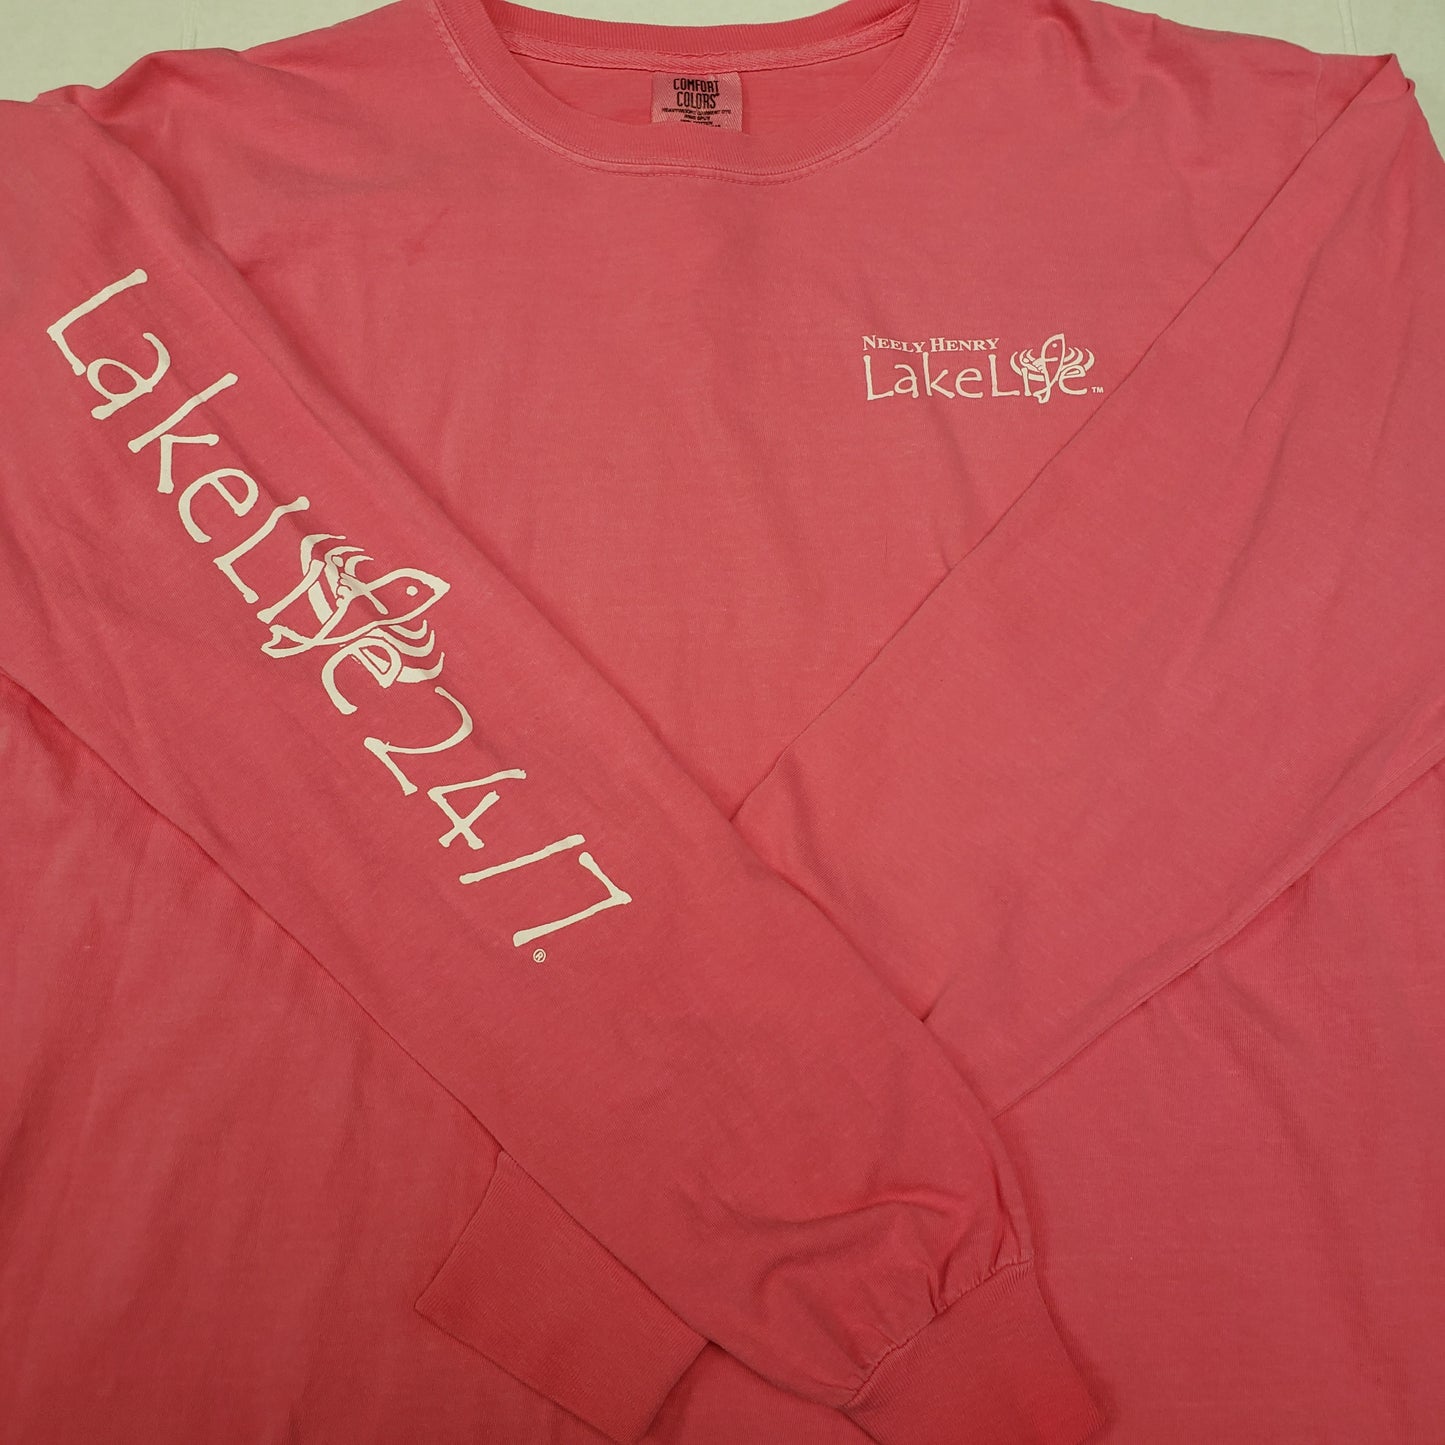 Lakelife LS Comfort Color Shirt Neely Henry